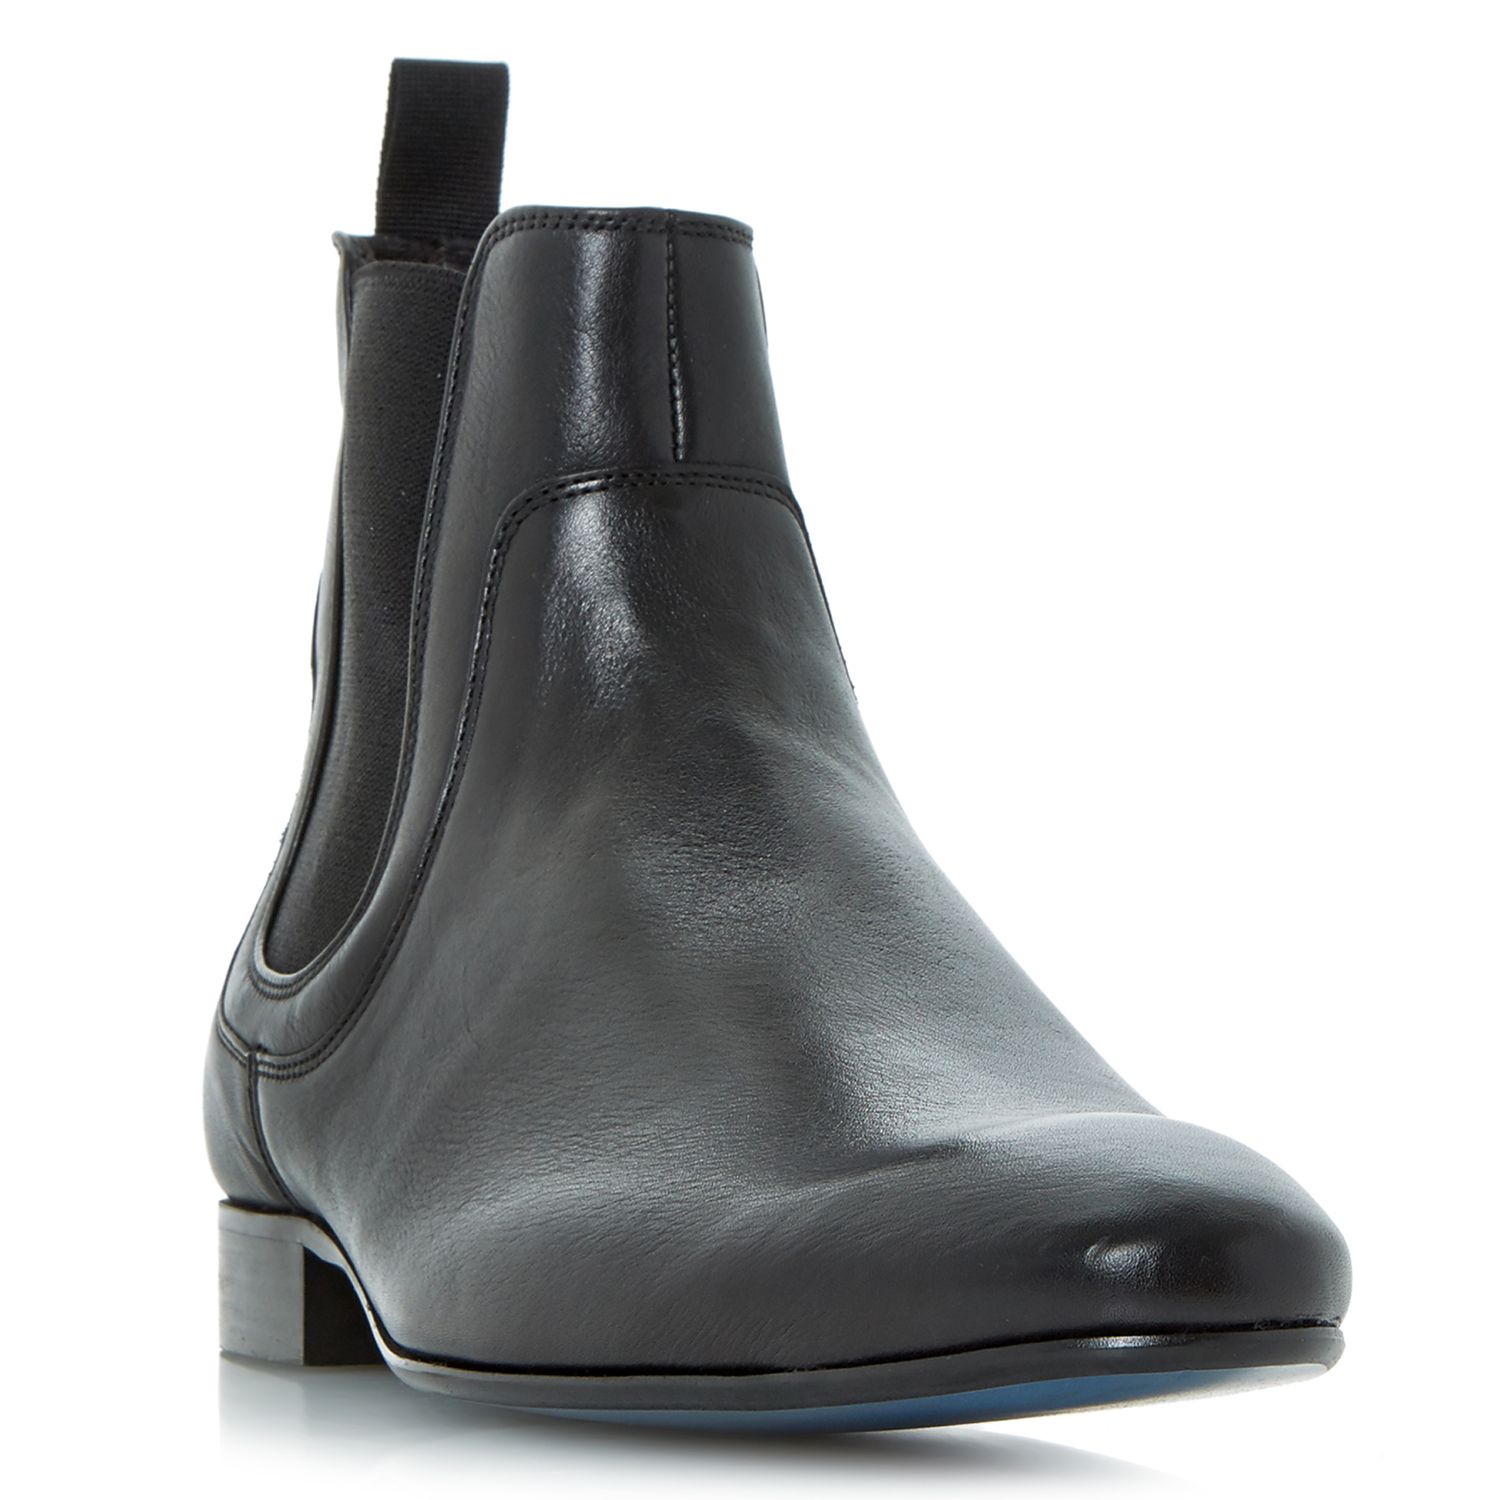 Bertie Maple Leather Chelsea Boots, Black, 11